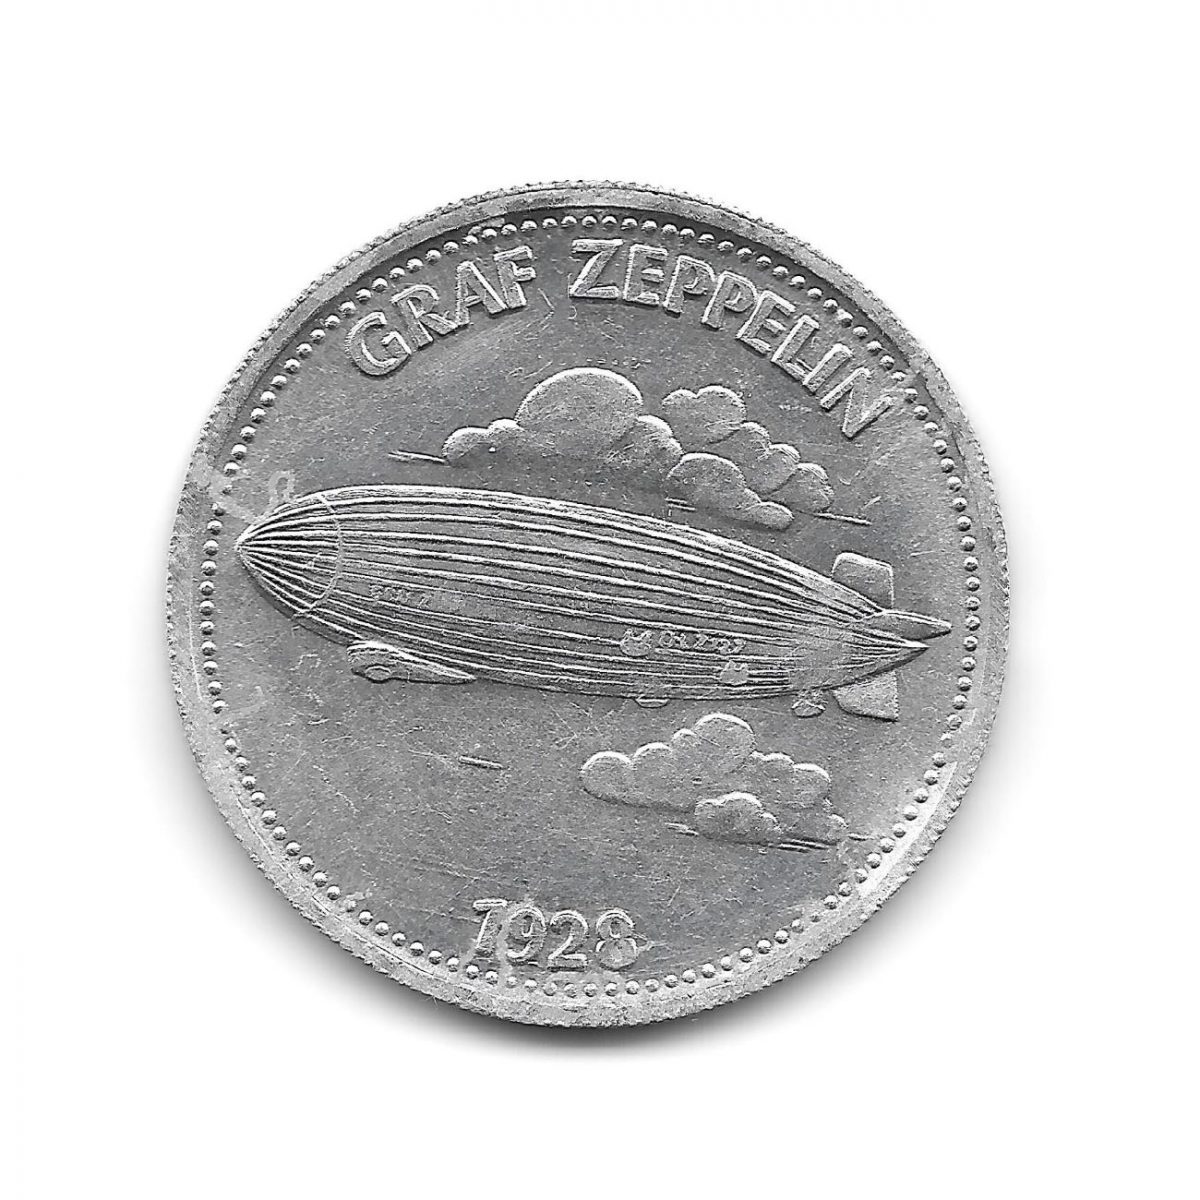 Shell, coins, Man in Flight, 1970s, Graf Zeppelin